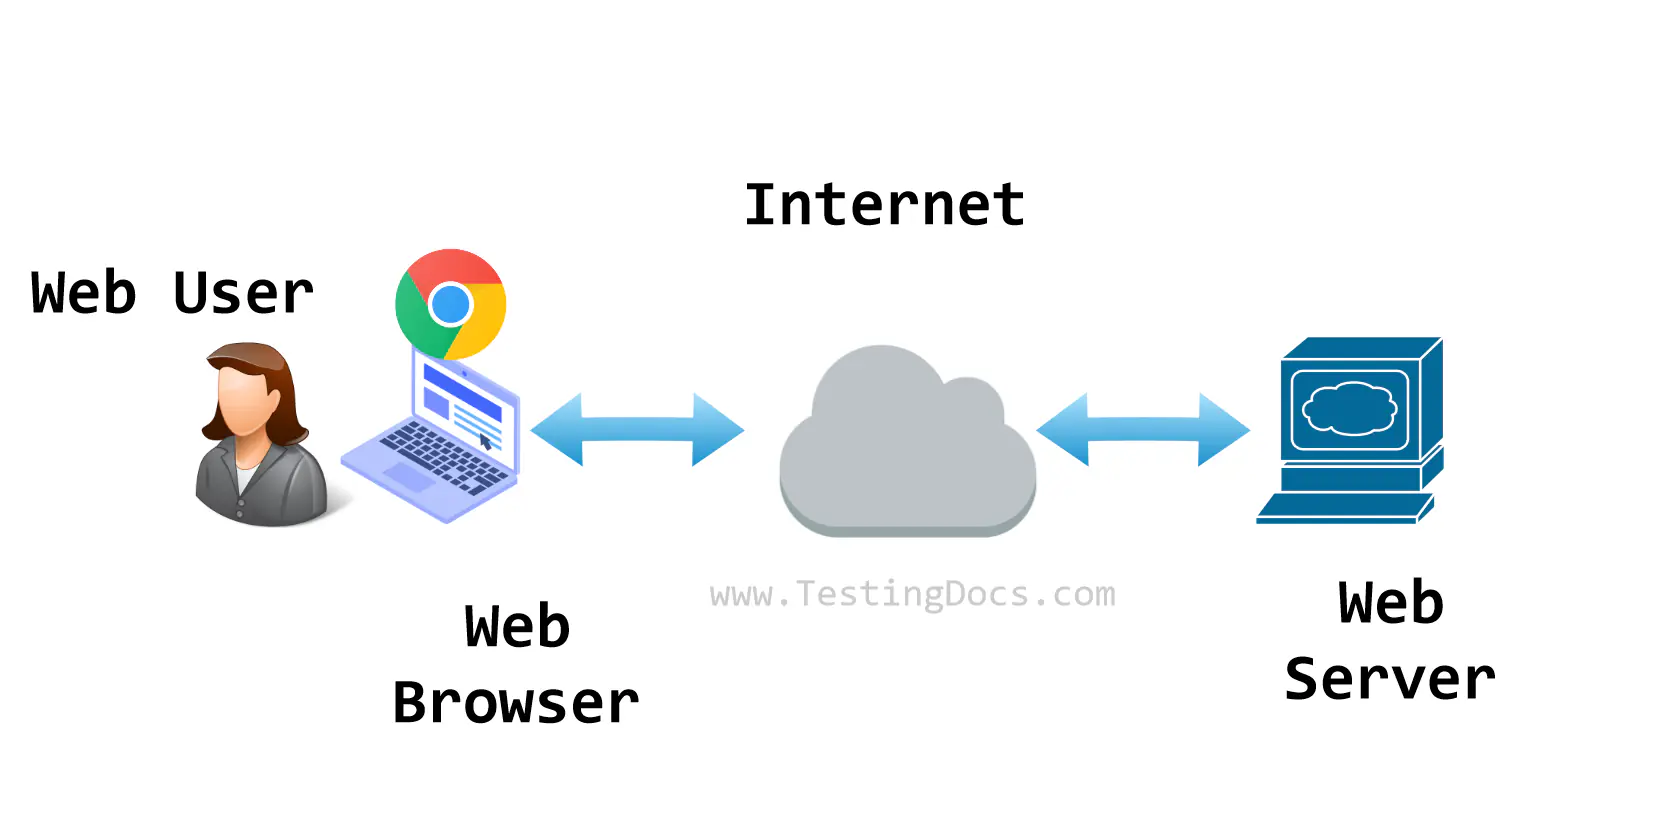 Web Browser Communication